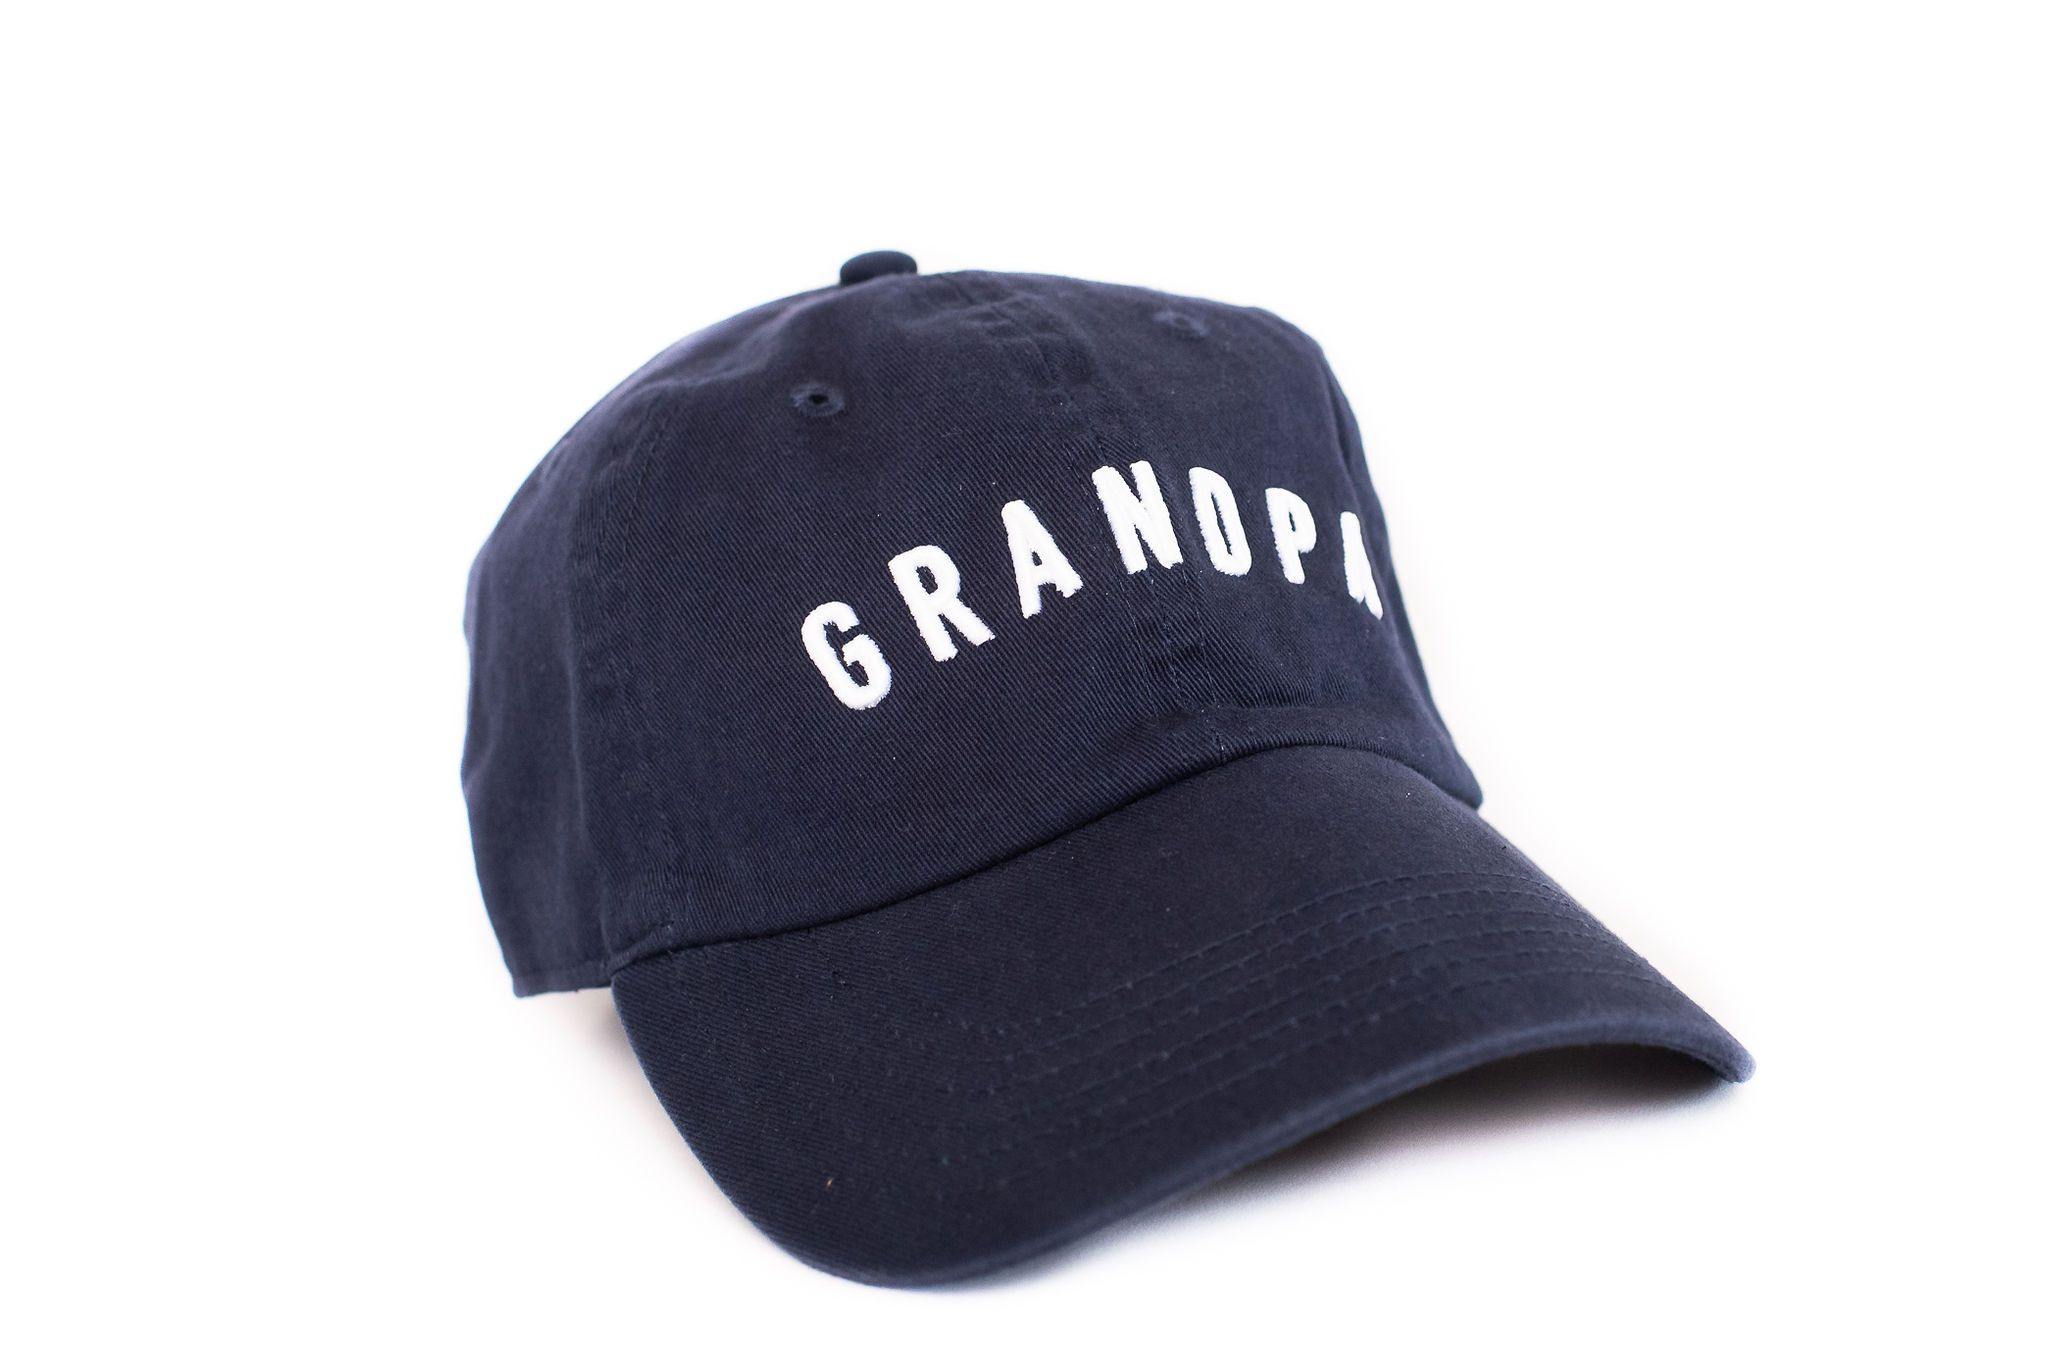 Navy Blue Grandpa Hat